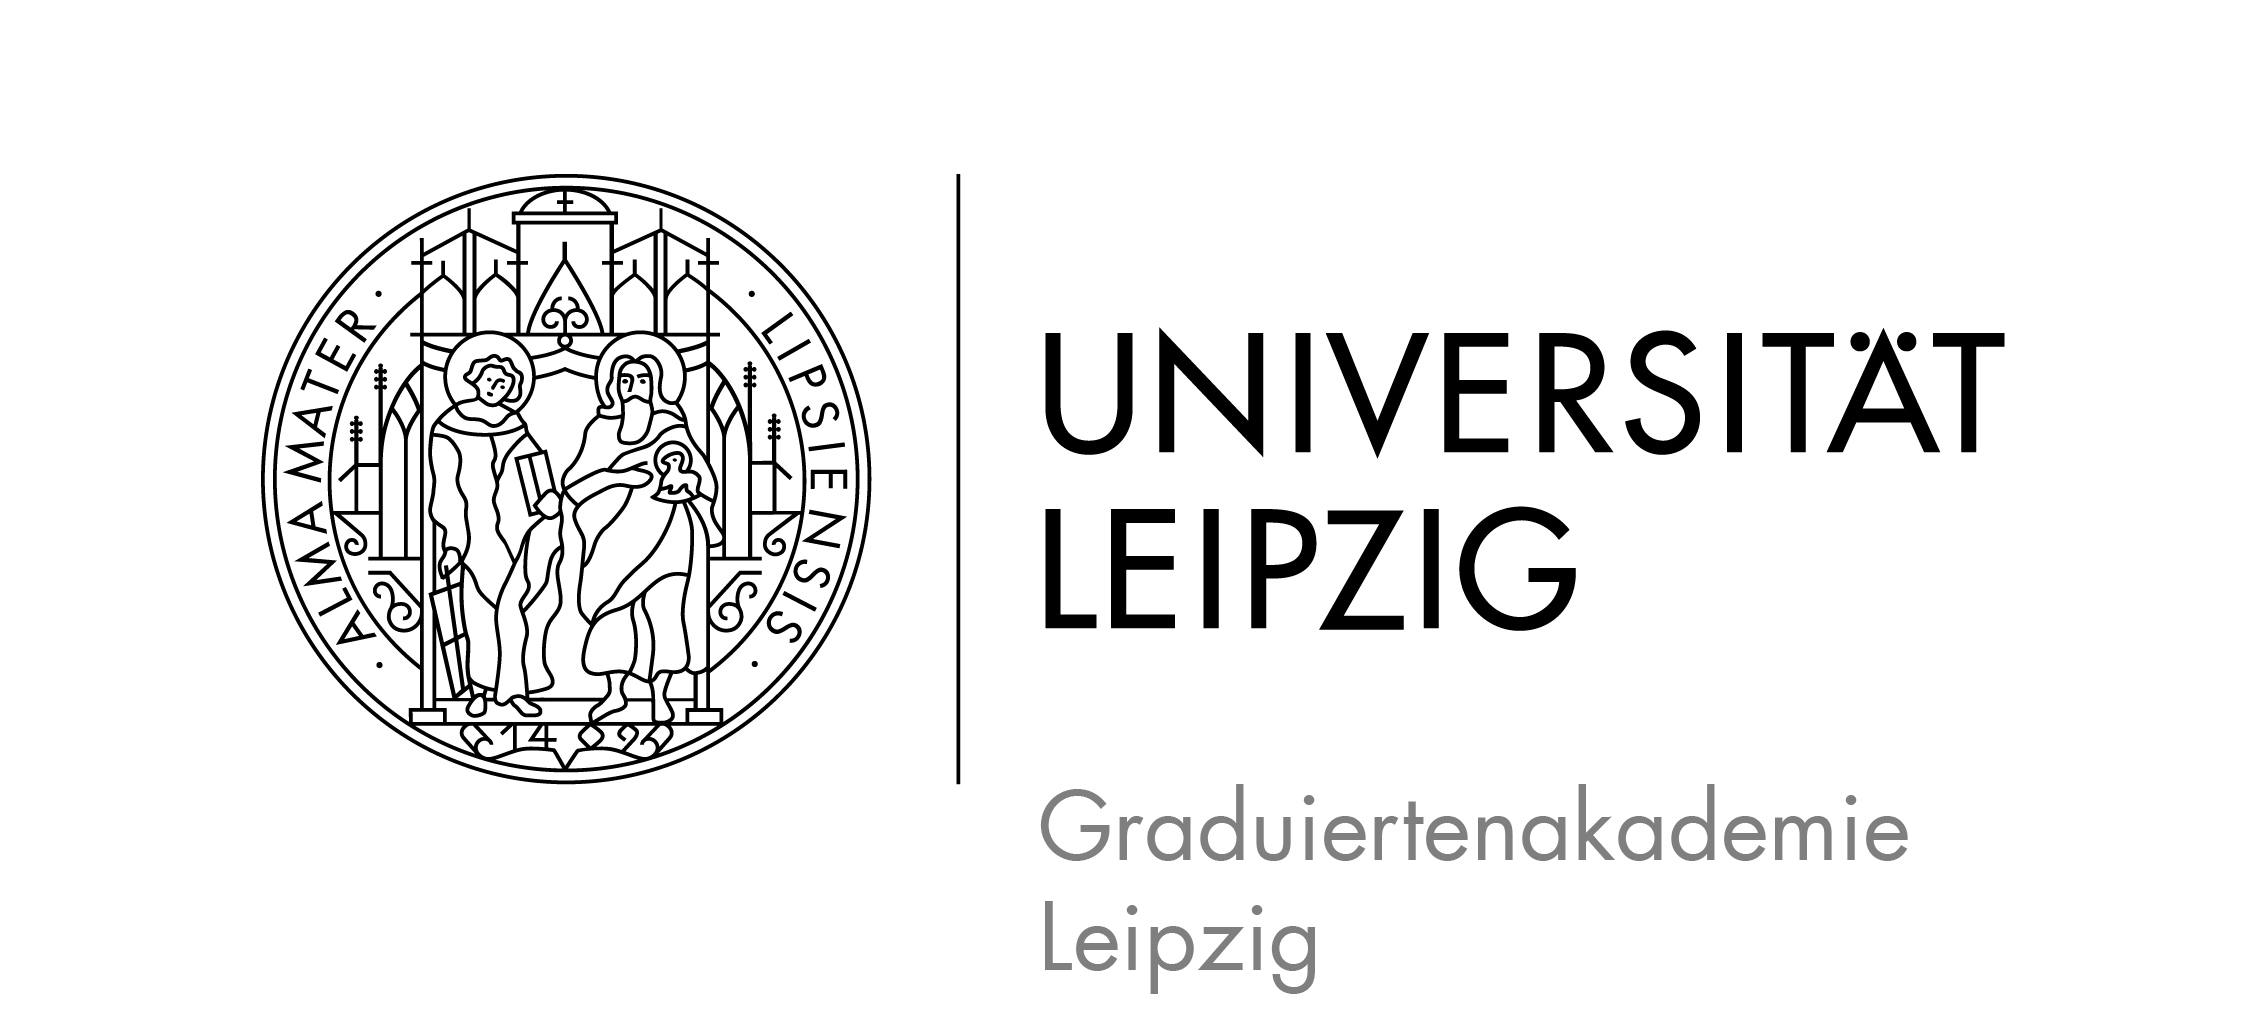 Graduate Academy Leipzig